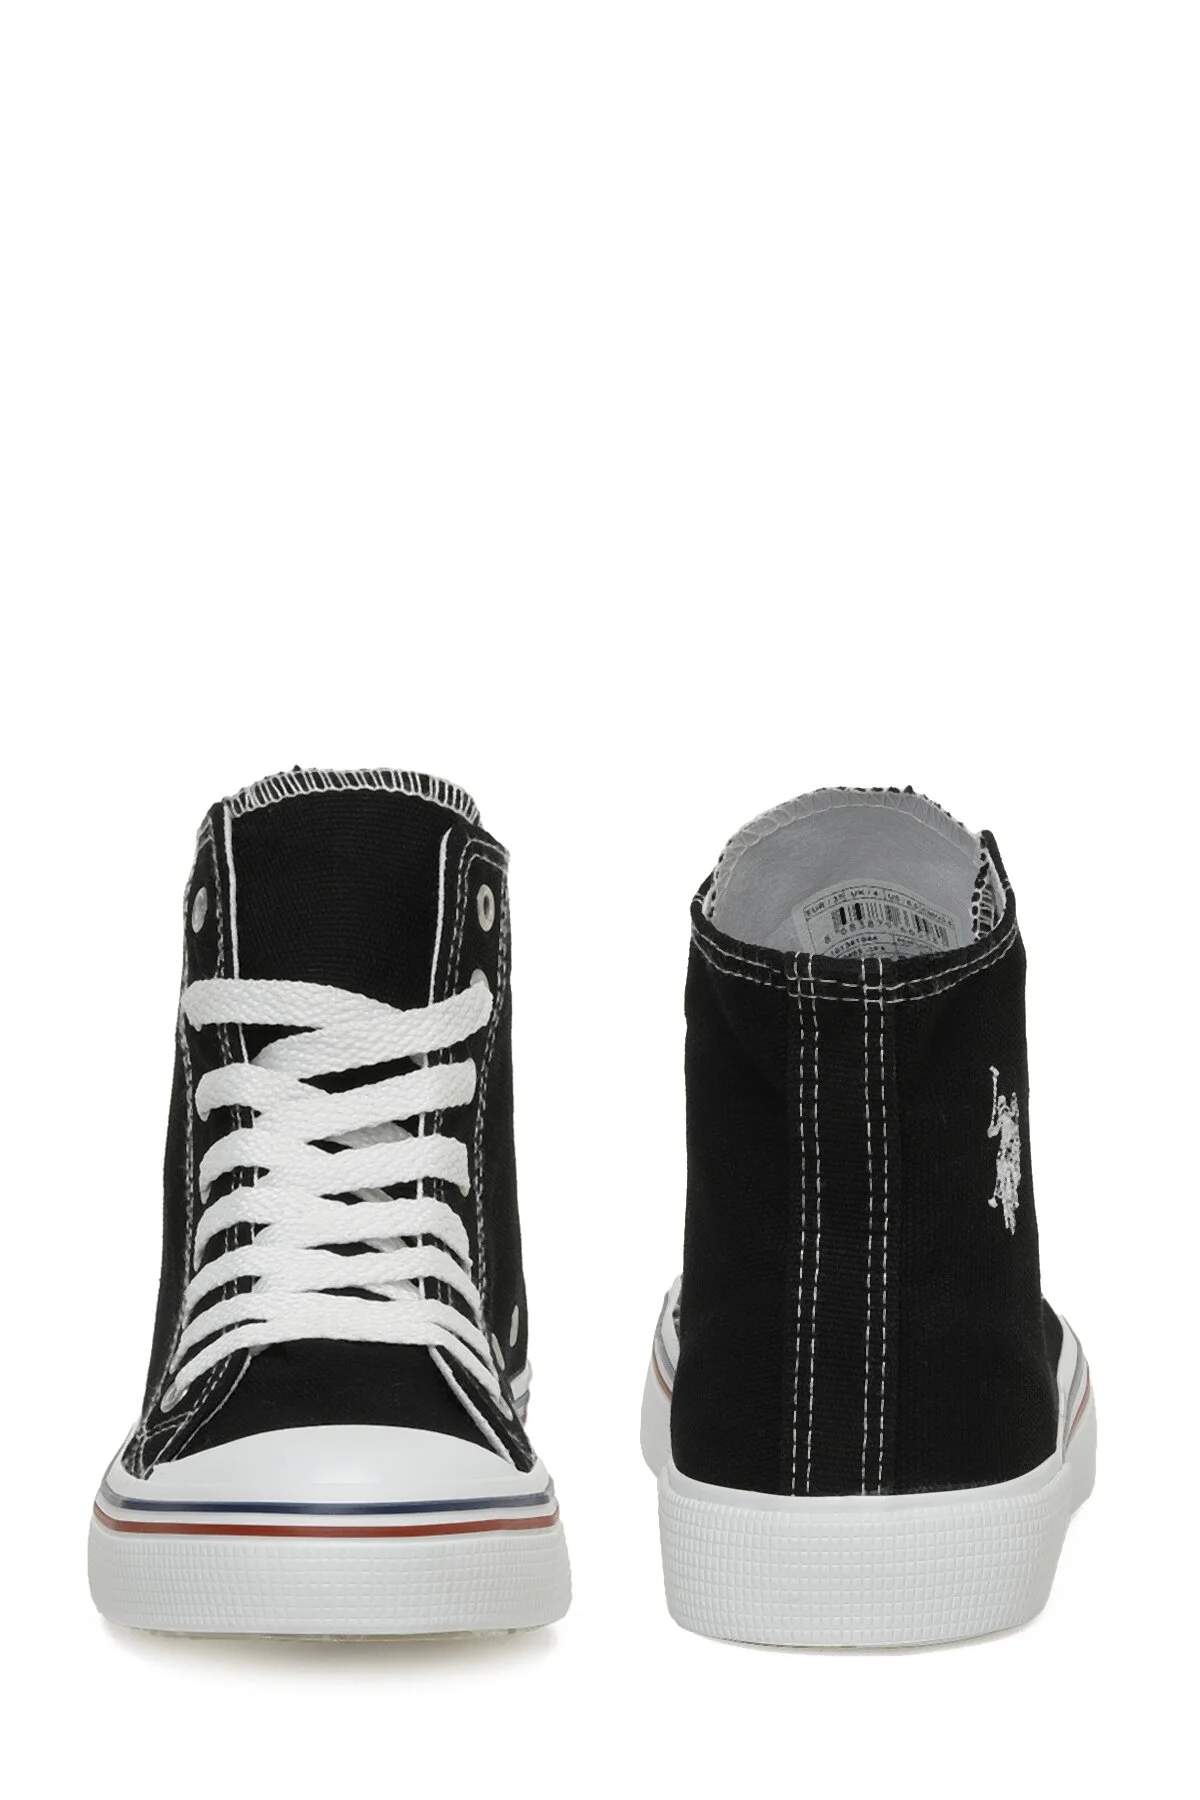 PENELOPE HIGH 3FX Kadın Sneaker-Siyah - Thumbnail